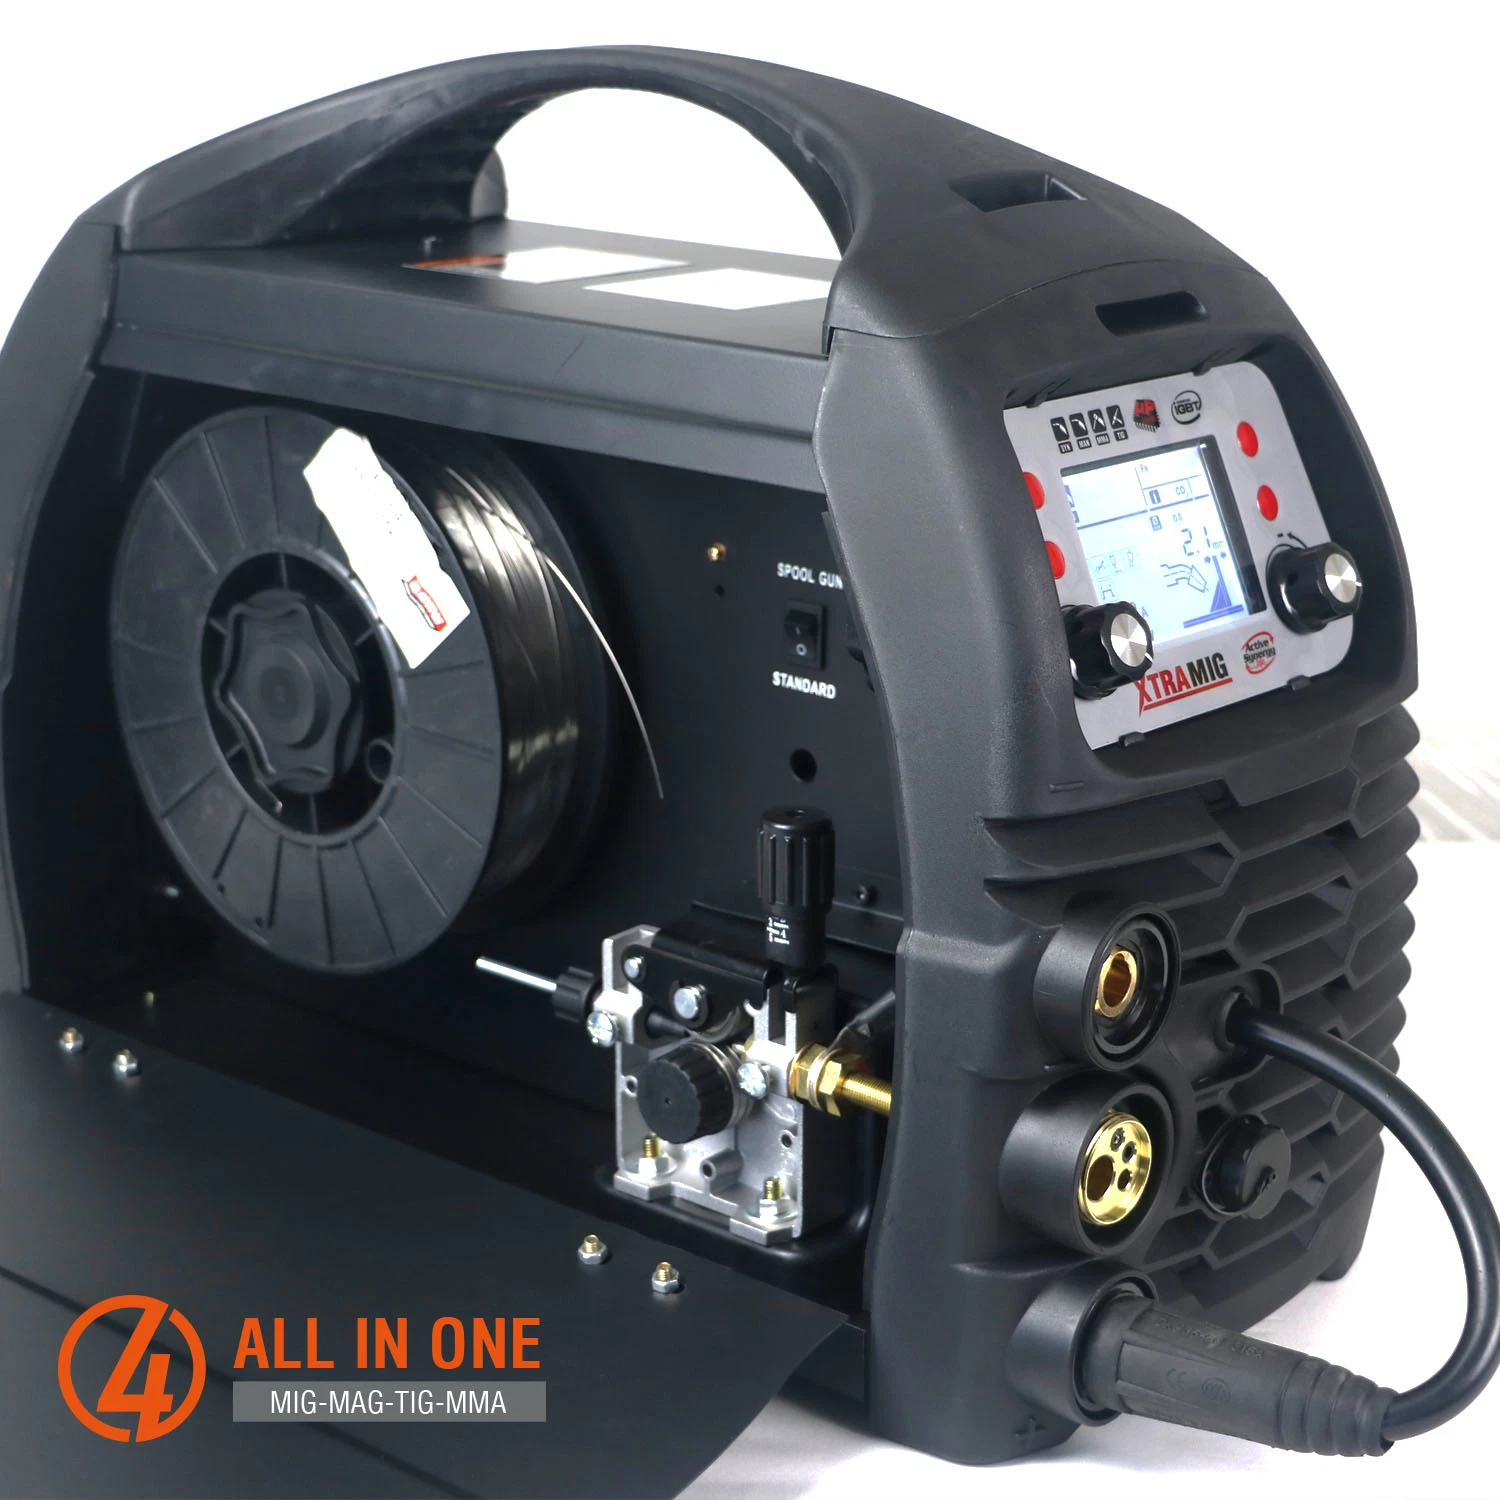 New Smart Inverter Welding Machine 200 AMP TIG MMA Mag MIG Synergic 4-in-1 Multifunction Welder Equipment